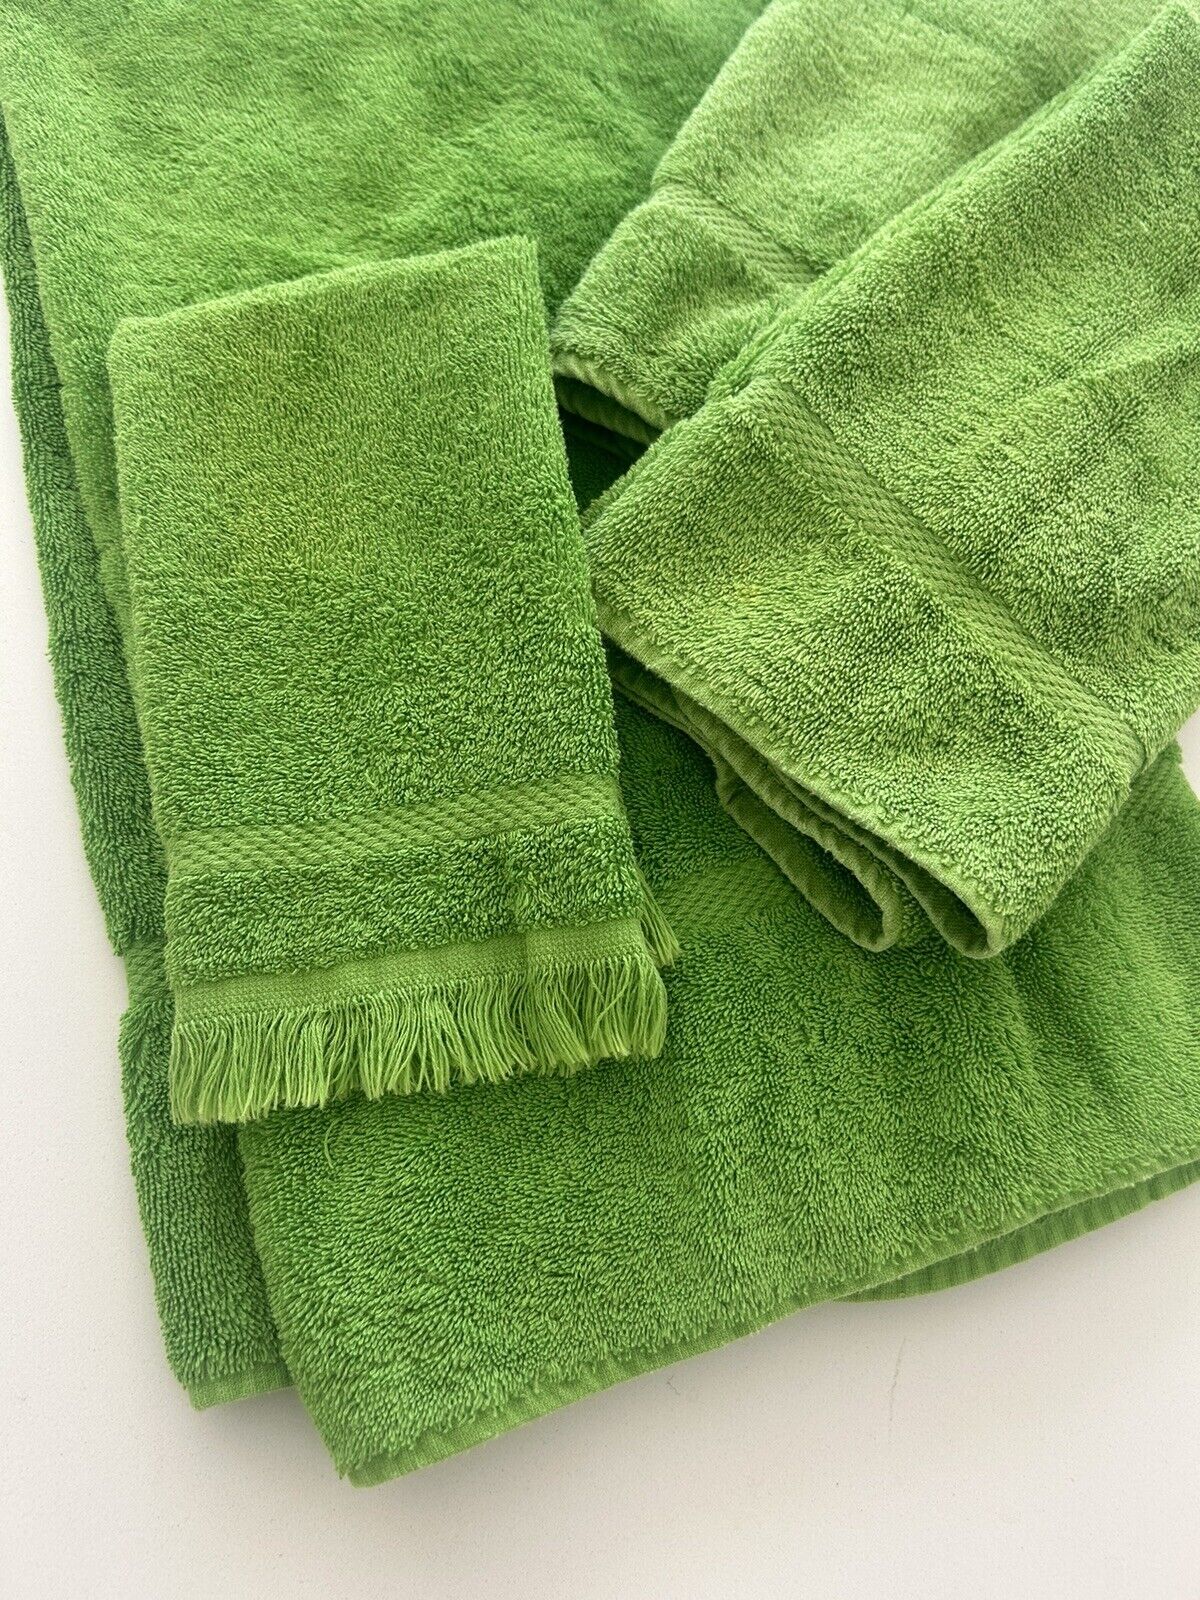 Lot of 4 vintage royal velvet by fieldcrest towel set Green